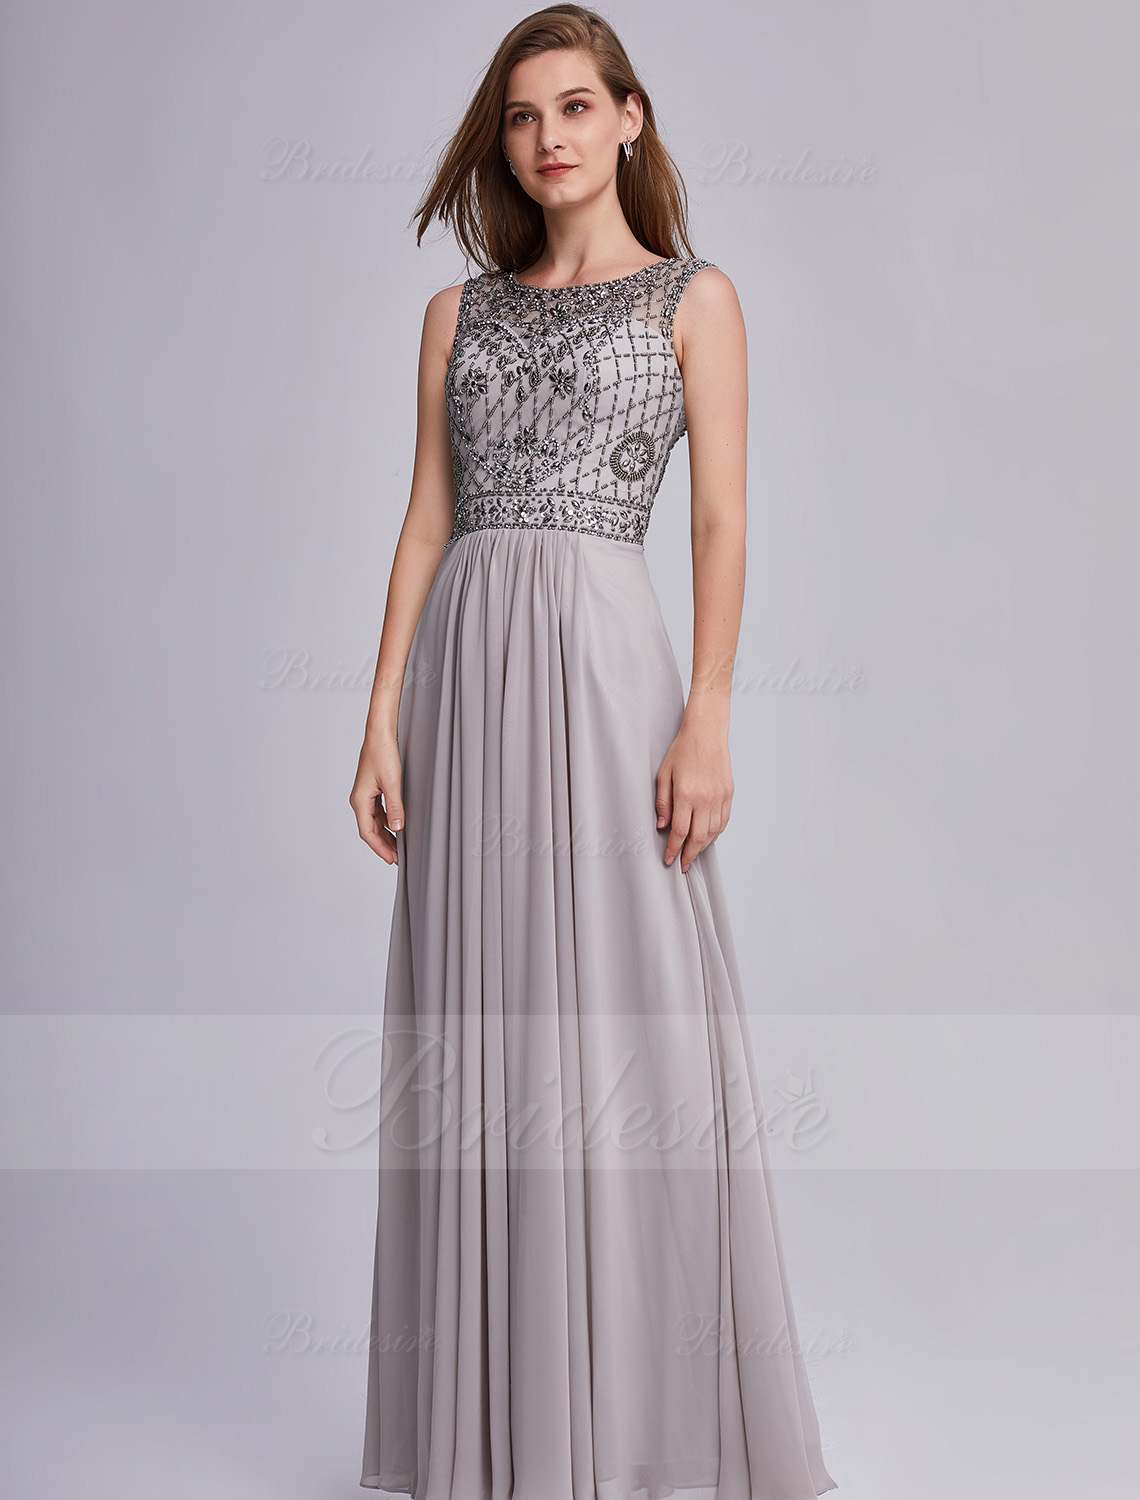 A-line Scoop Floor-length Prom Dress